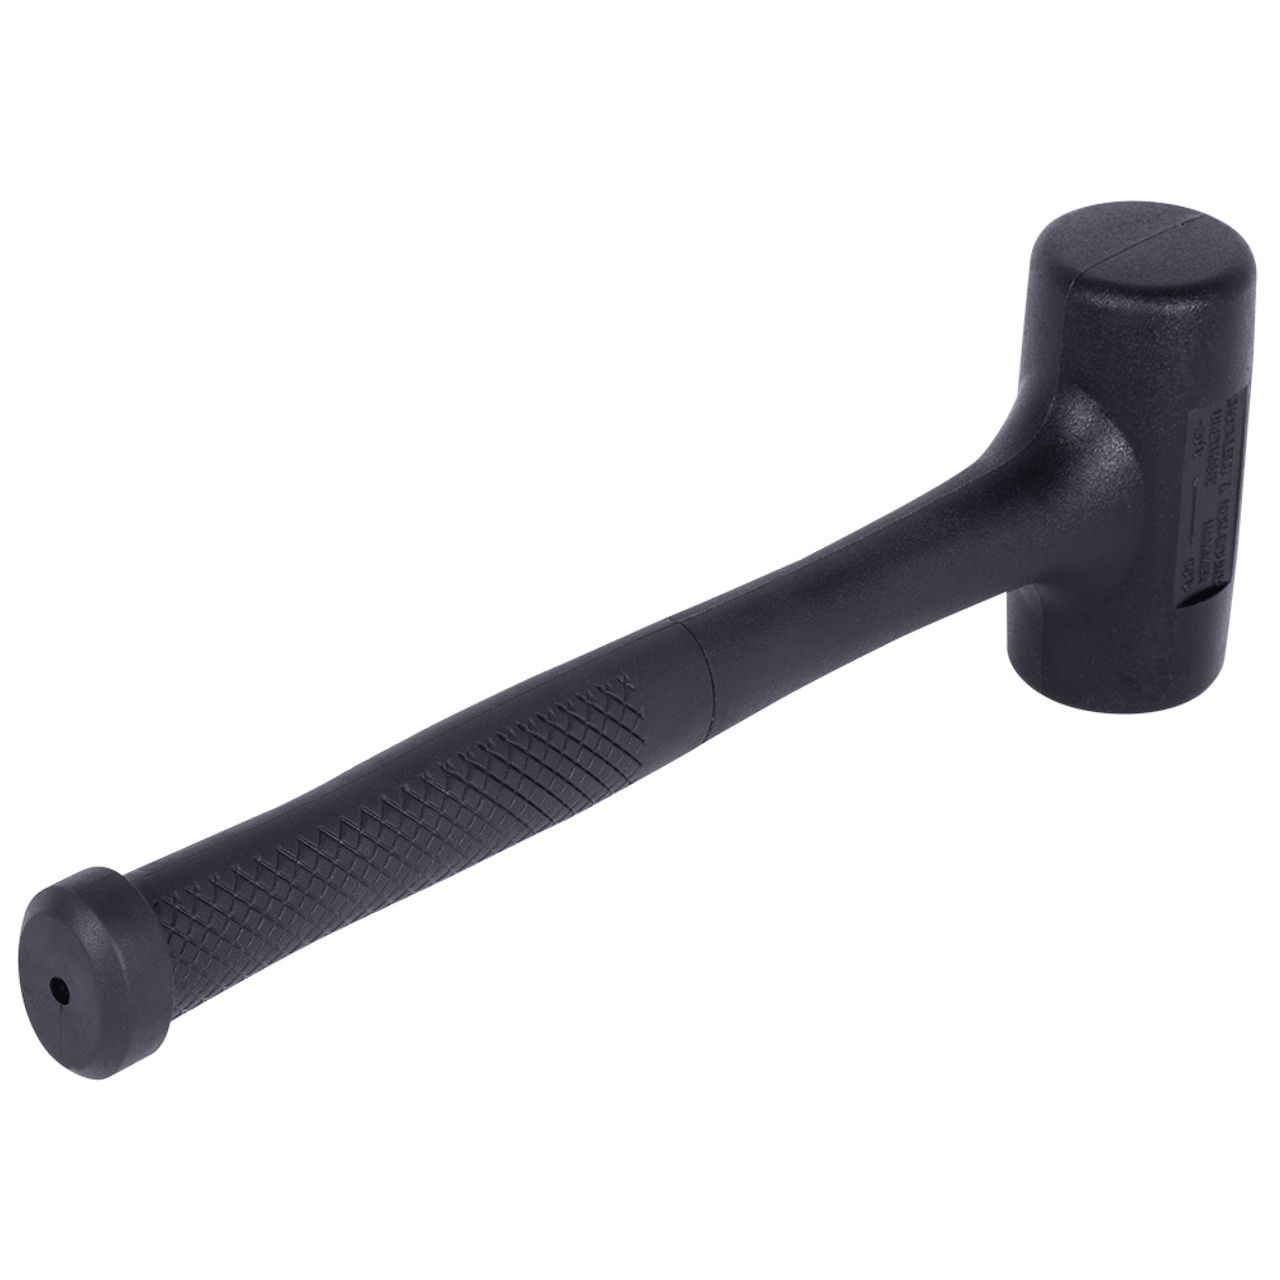 2-1/4 lb. Dead Blow Sledge Hammer 740924